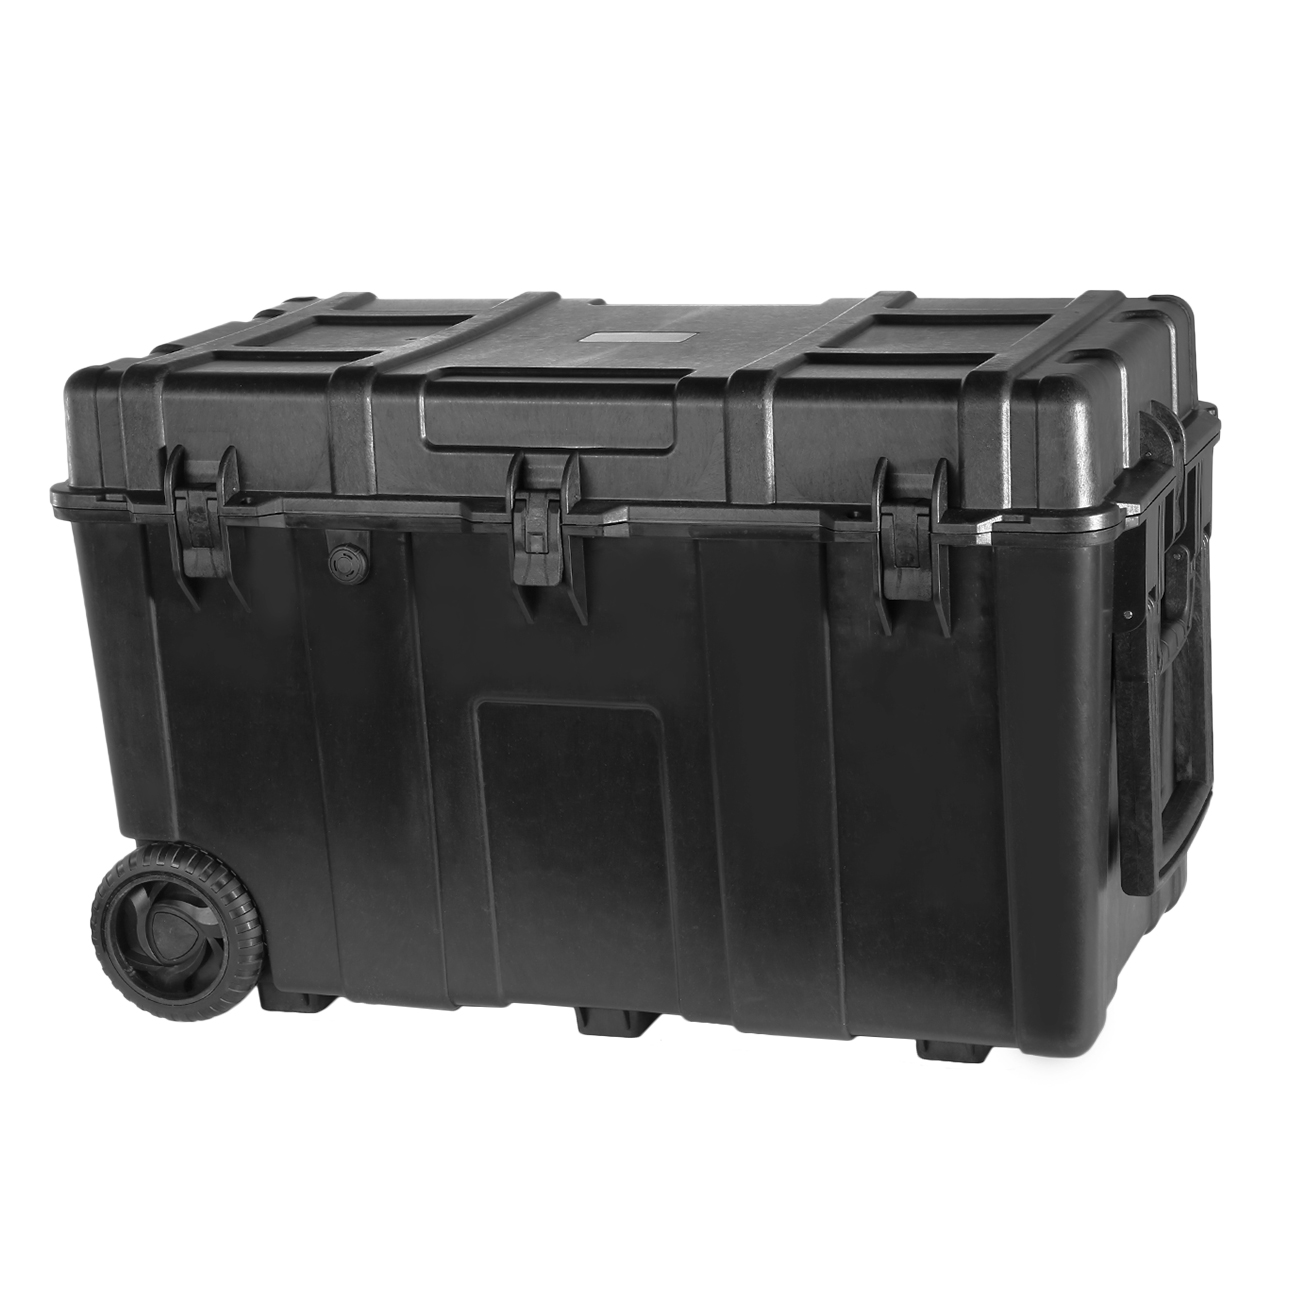 Nuprol Kit Box / Ultimate Hard Case Transport-Trolley 86 x 46 x 53 cm schwarz